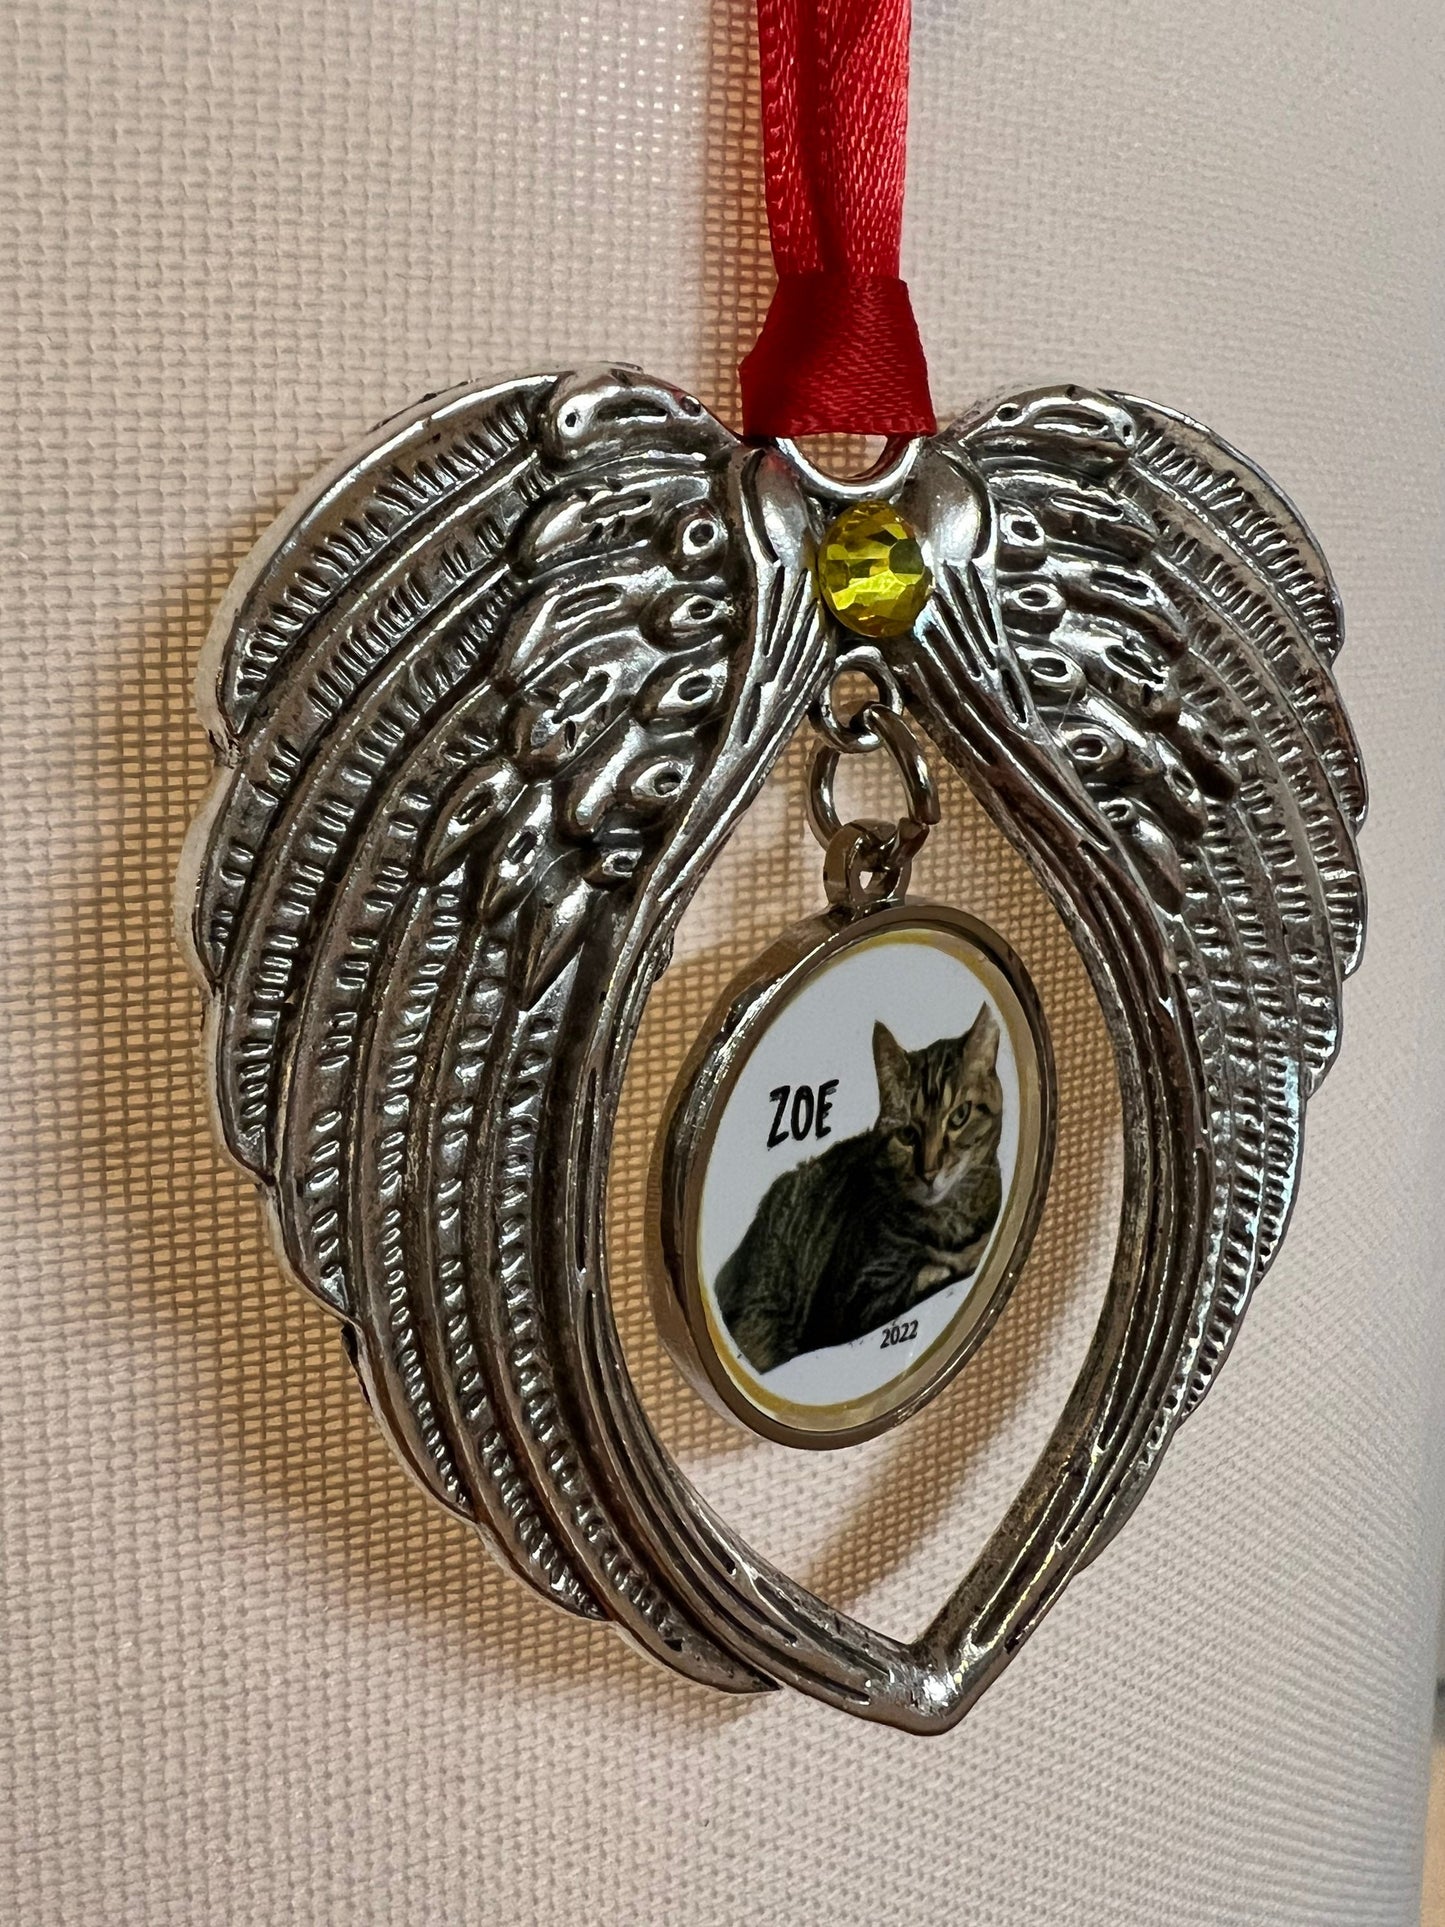 Angel Wings Ornament - Handmade Ornament, Christmas Ornament, Photo Ornament, Memorial Ornament, Custom Ornament